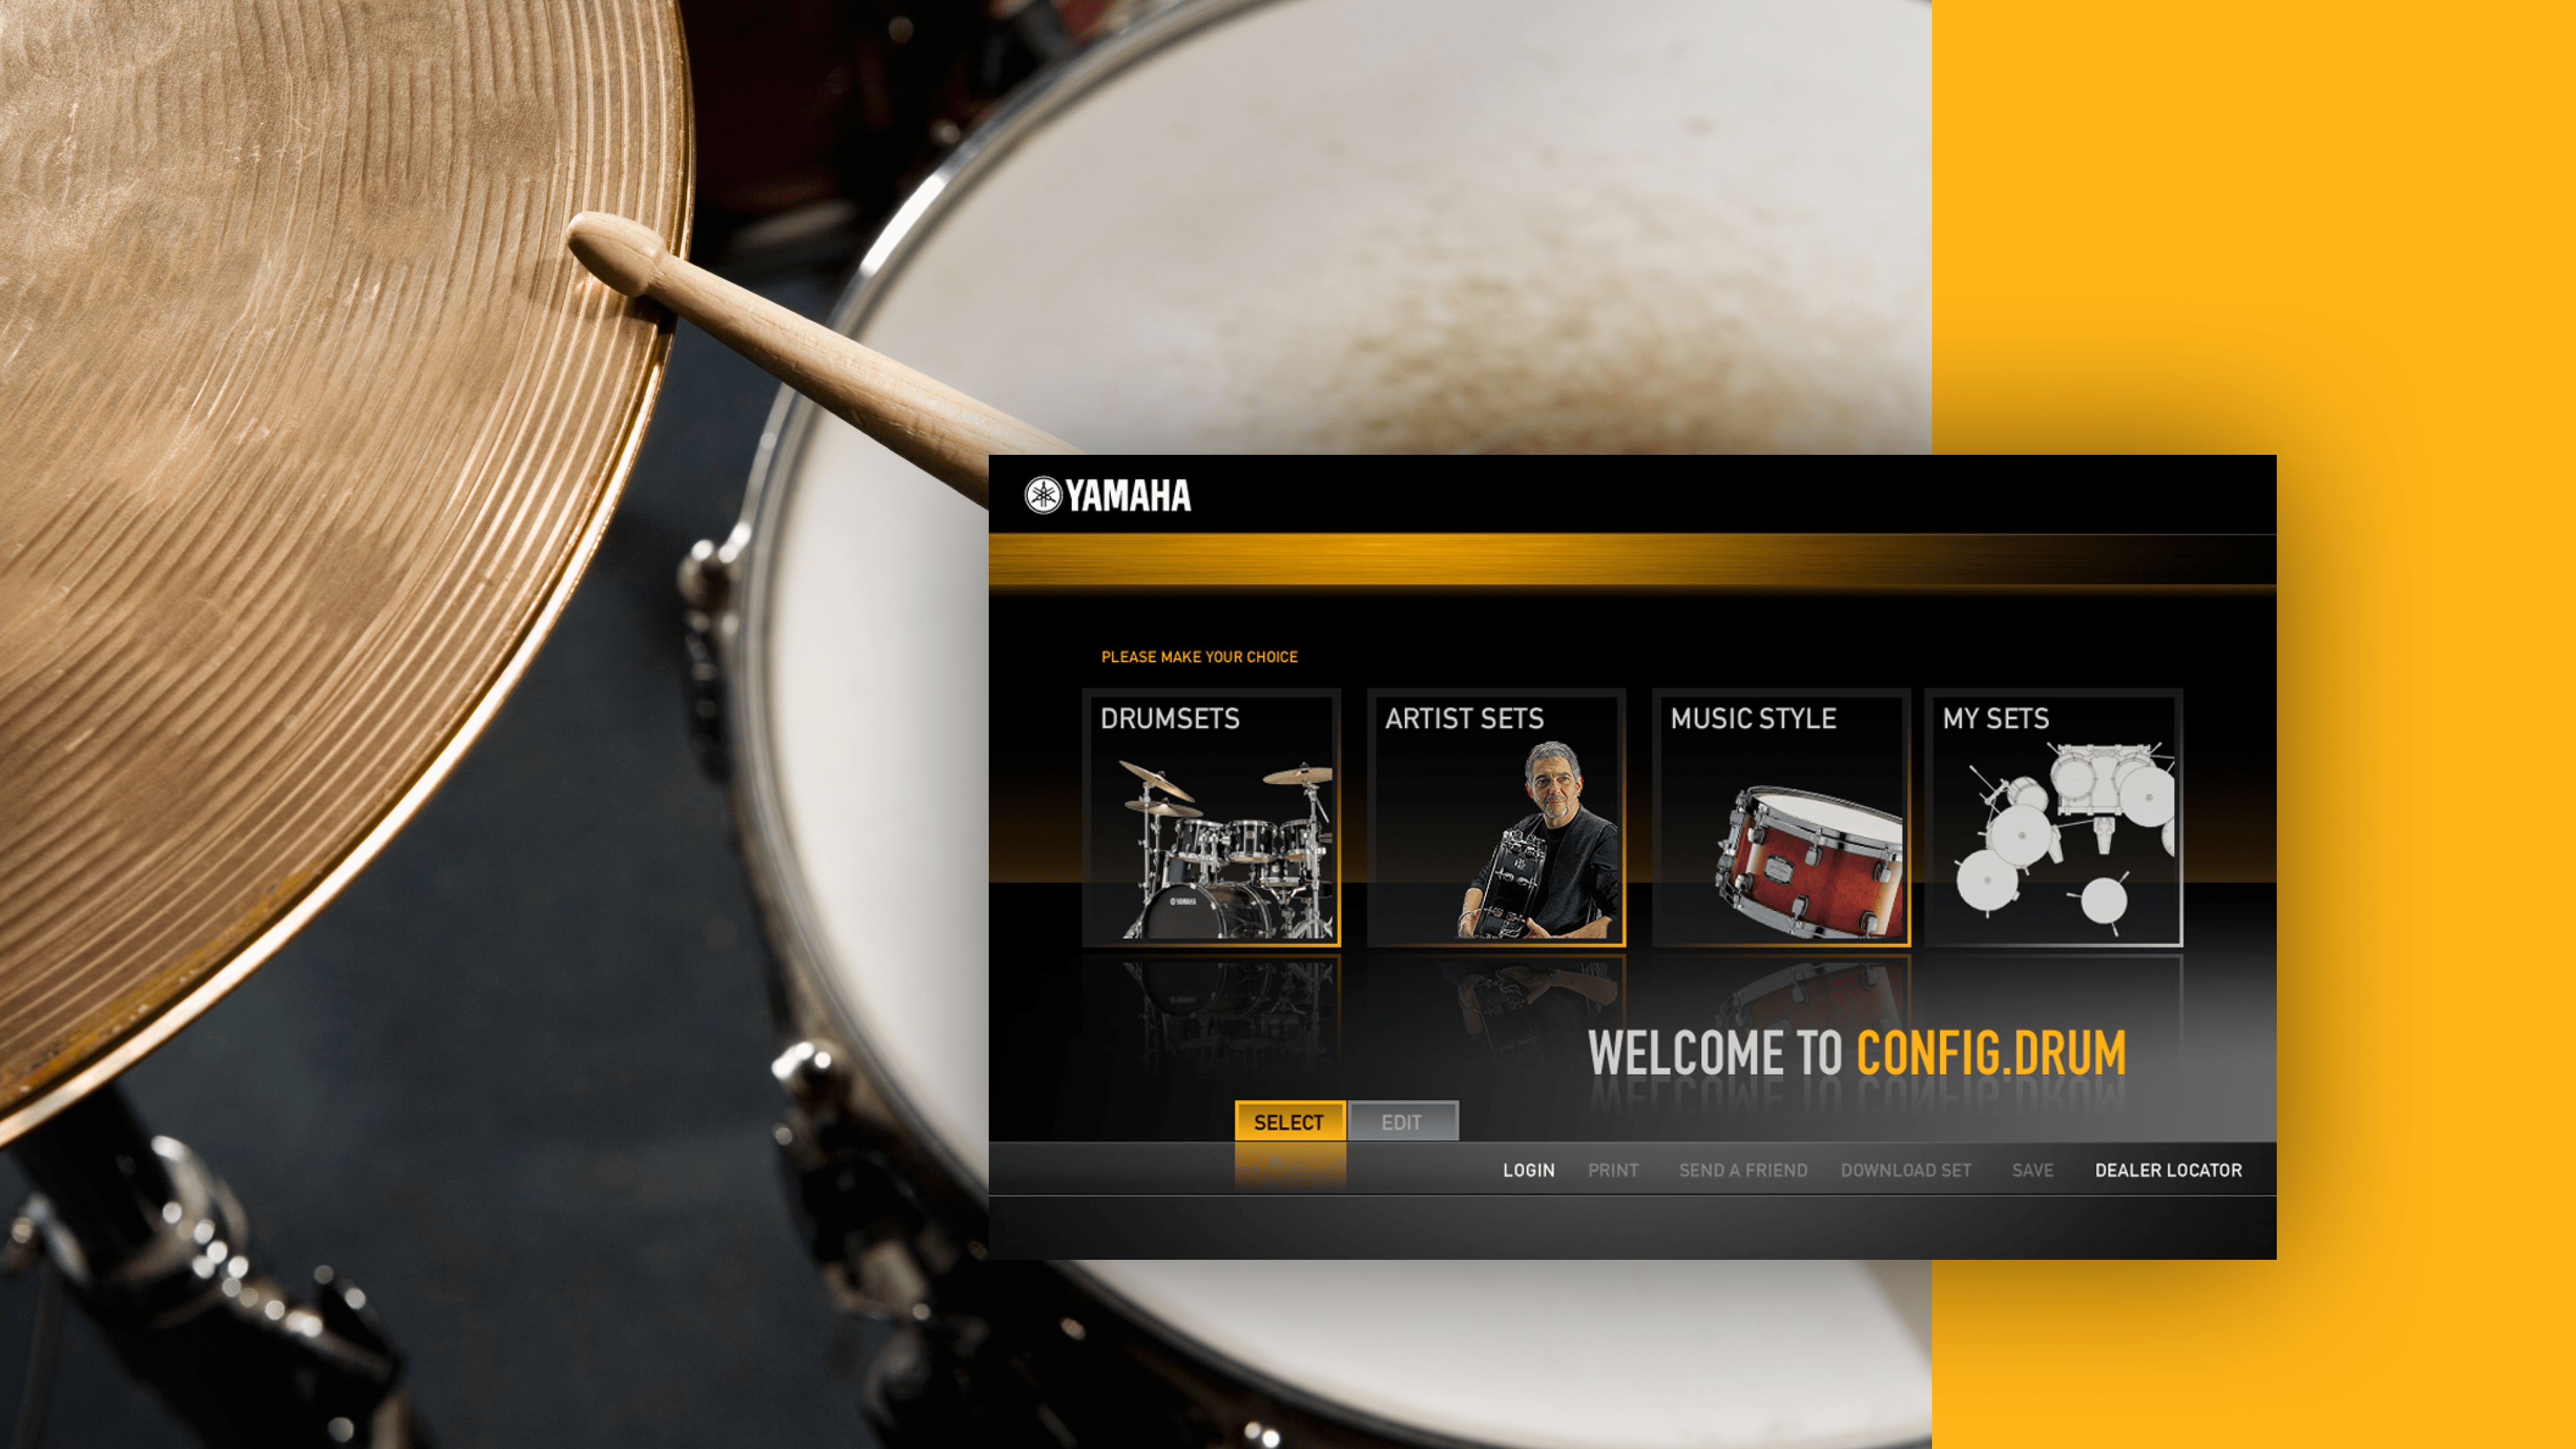 Yamaha Music Config.drum Interactive Kit Creator